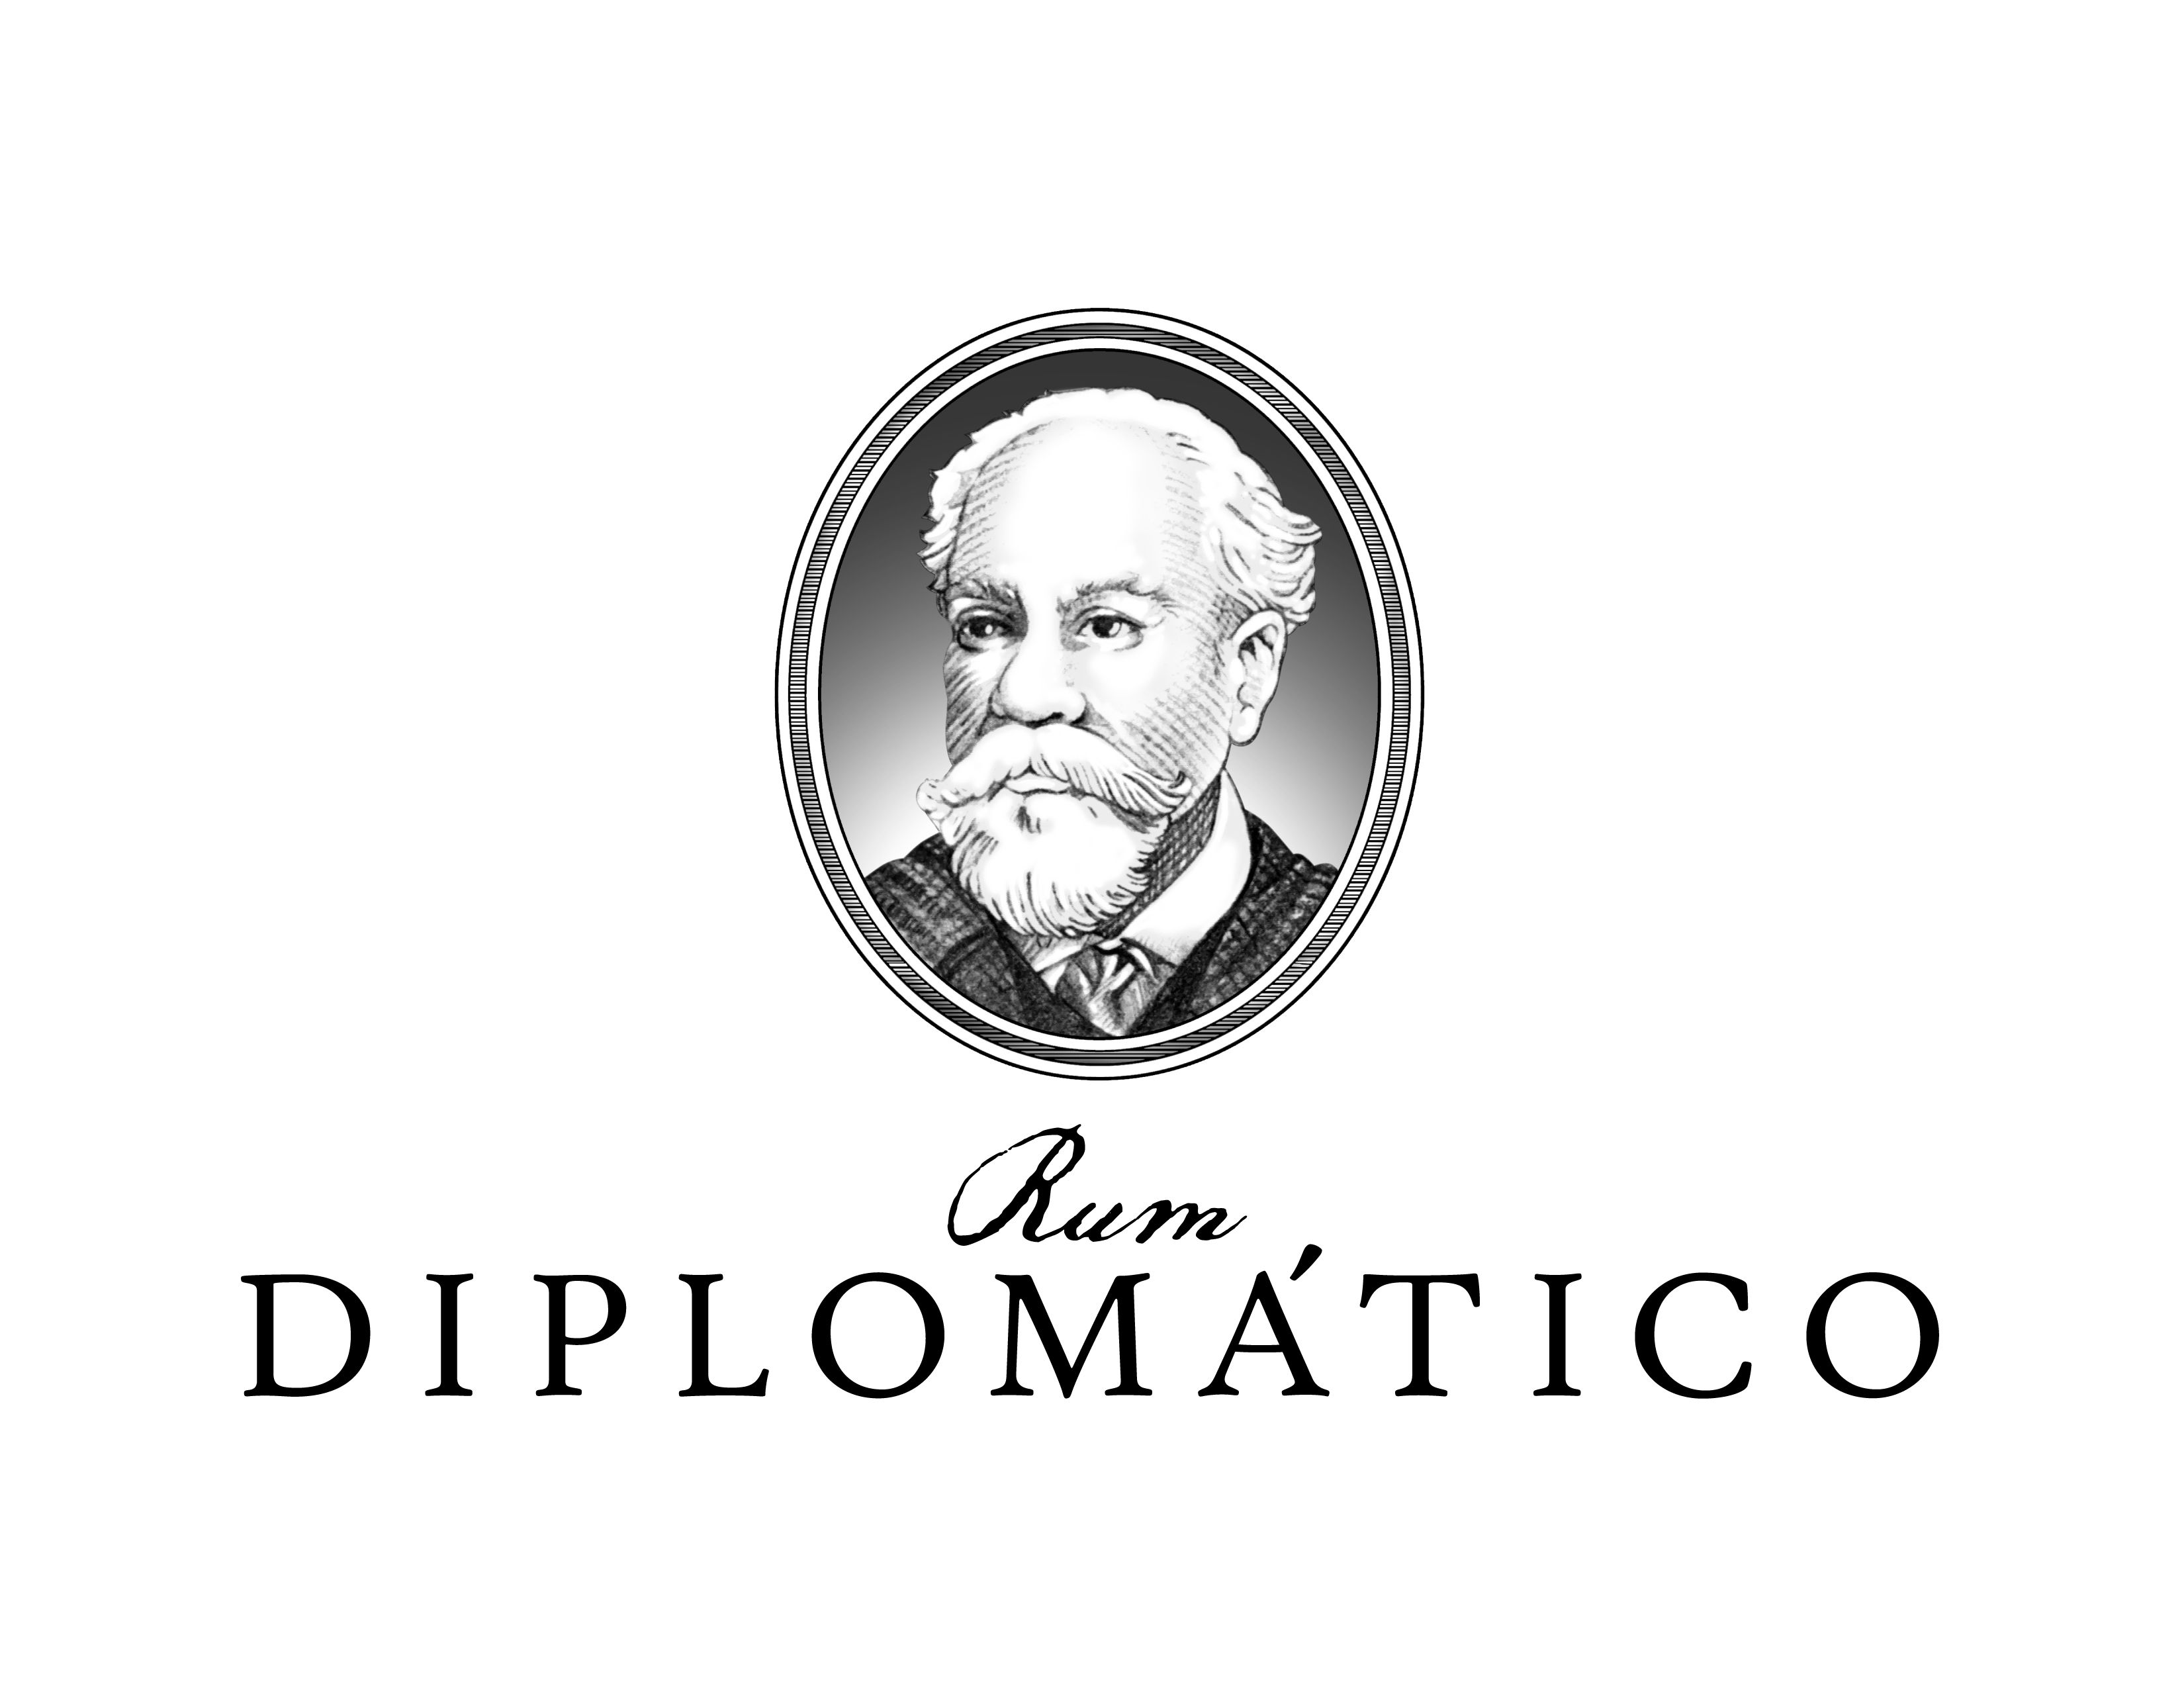 DiplomaticoLogo-web